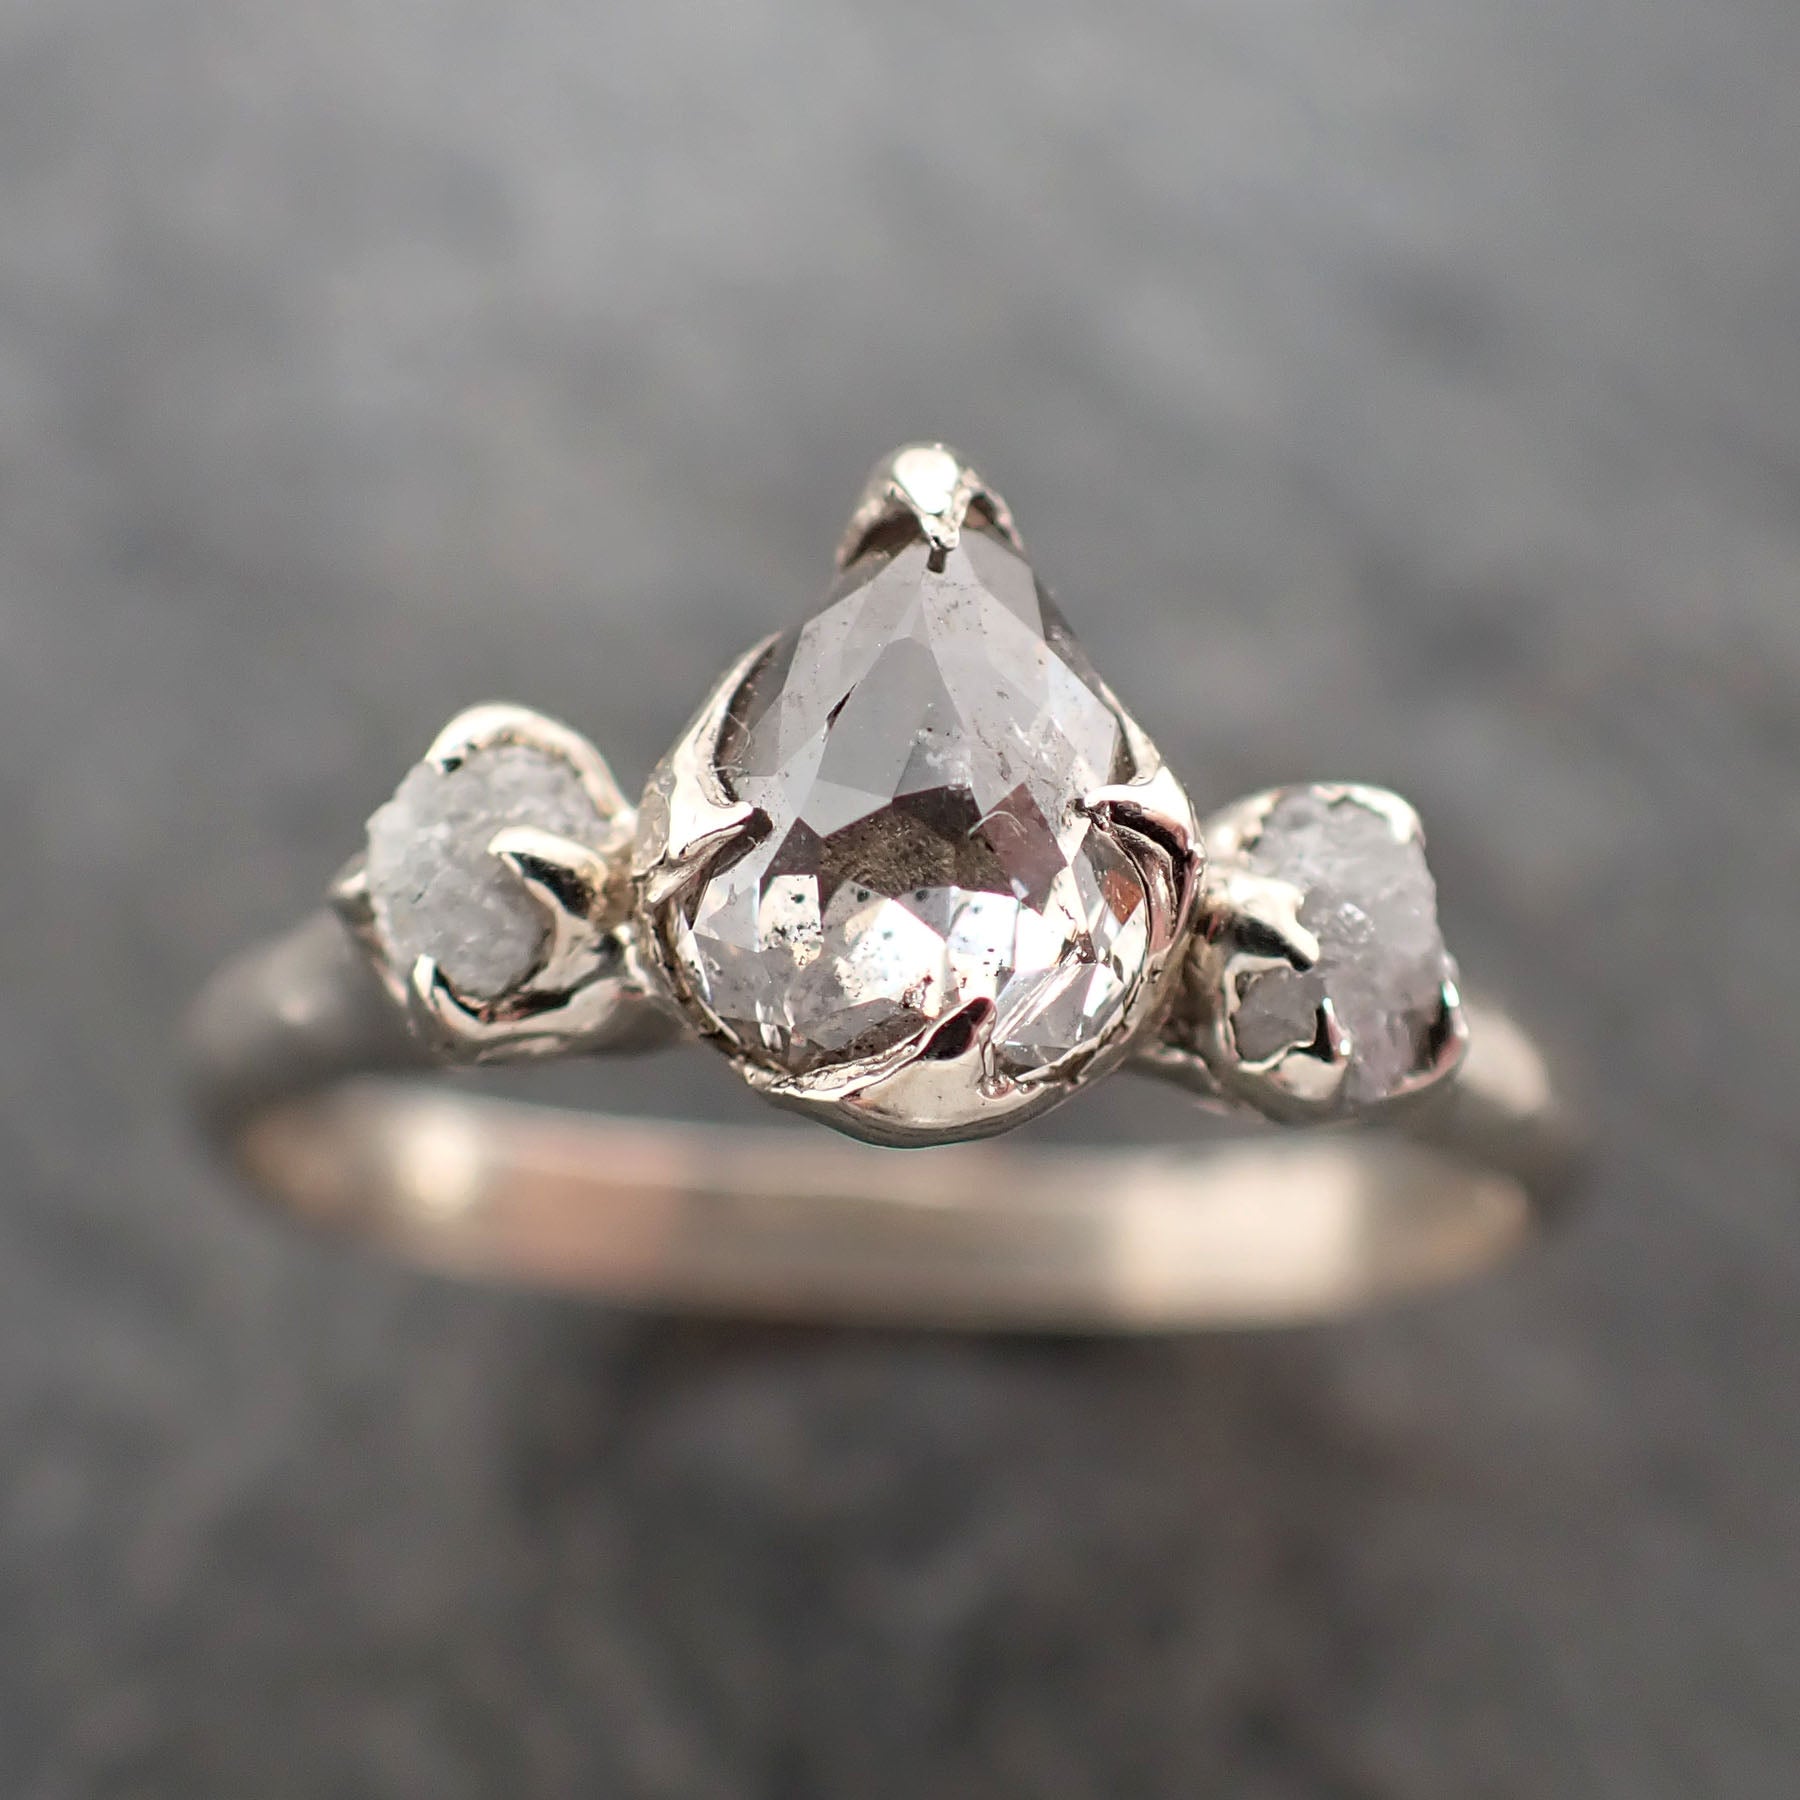 faceted fancy cut champagne diamond engagement 14k white gold multi stone wedding ring rough diamond ring byangeline 2385 Alternative Engagement